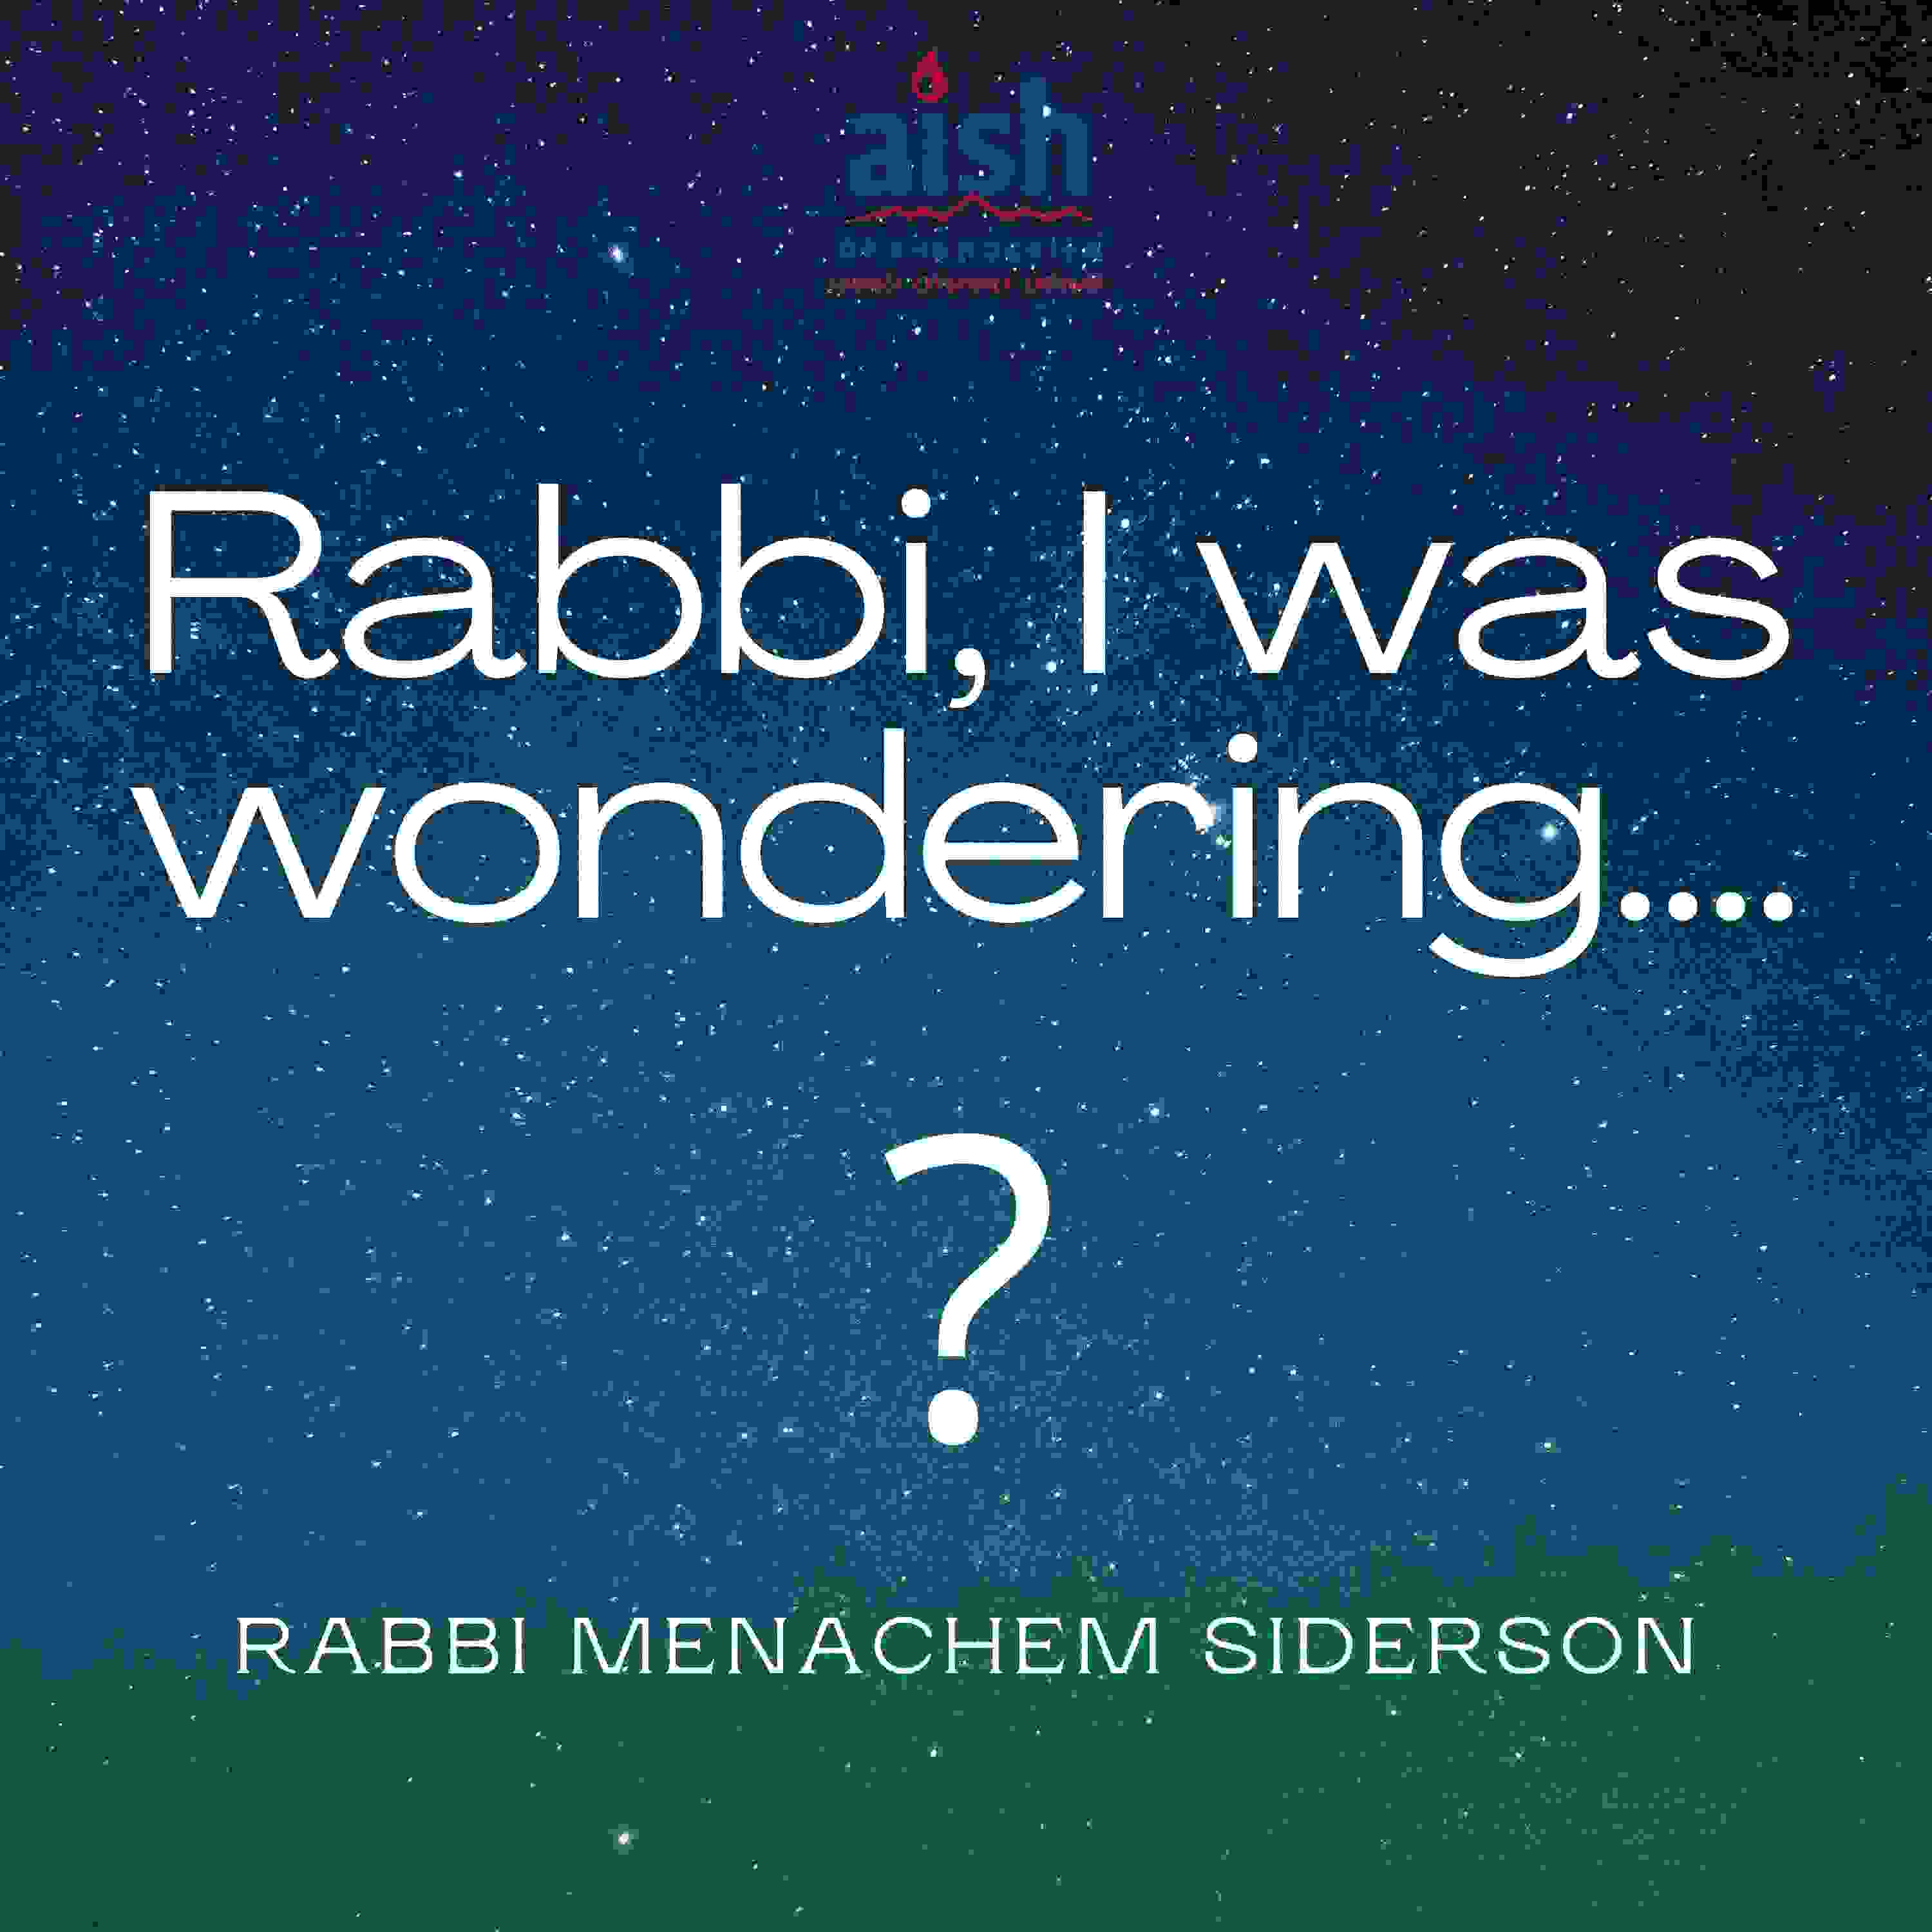 Artwork for Rabbi, I was wondering...